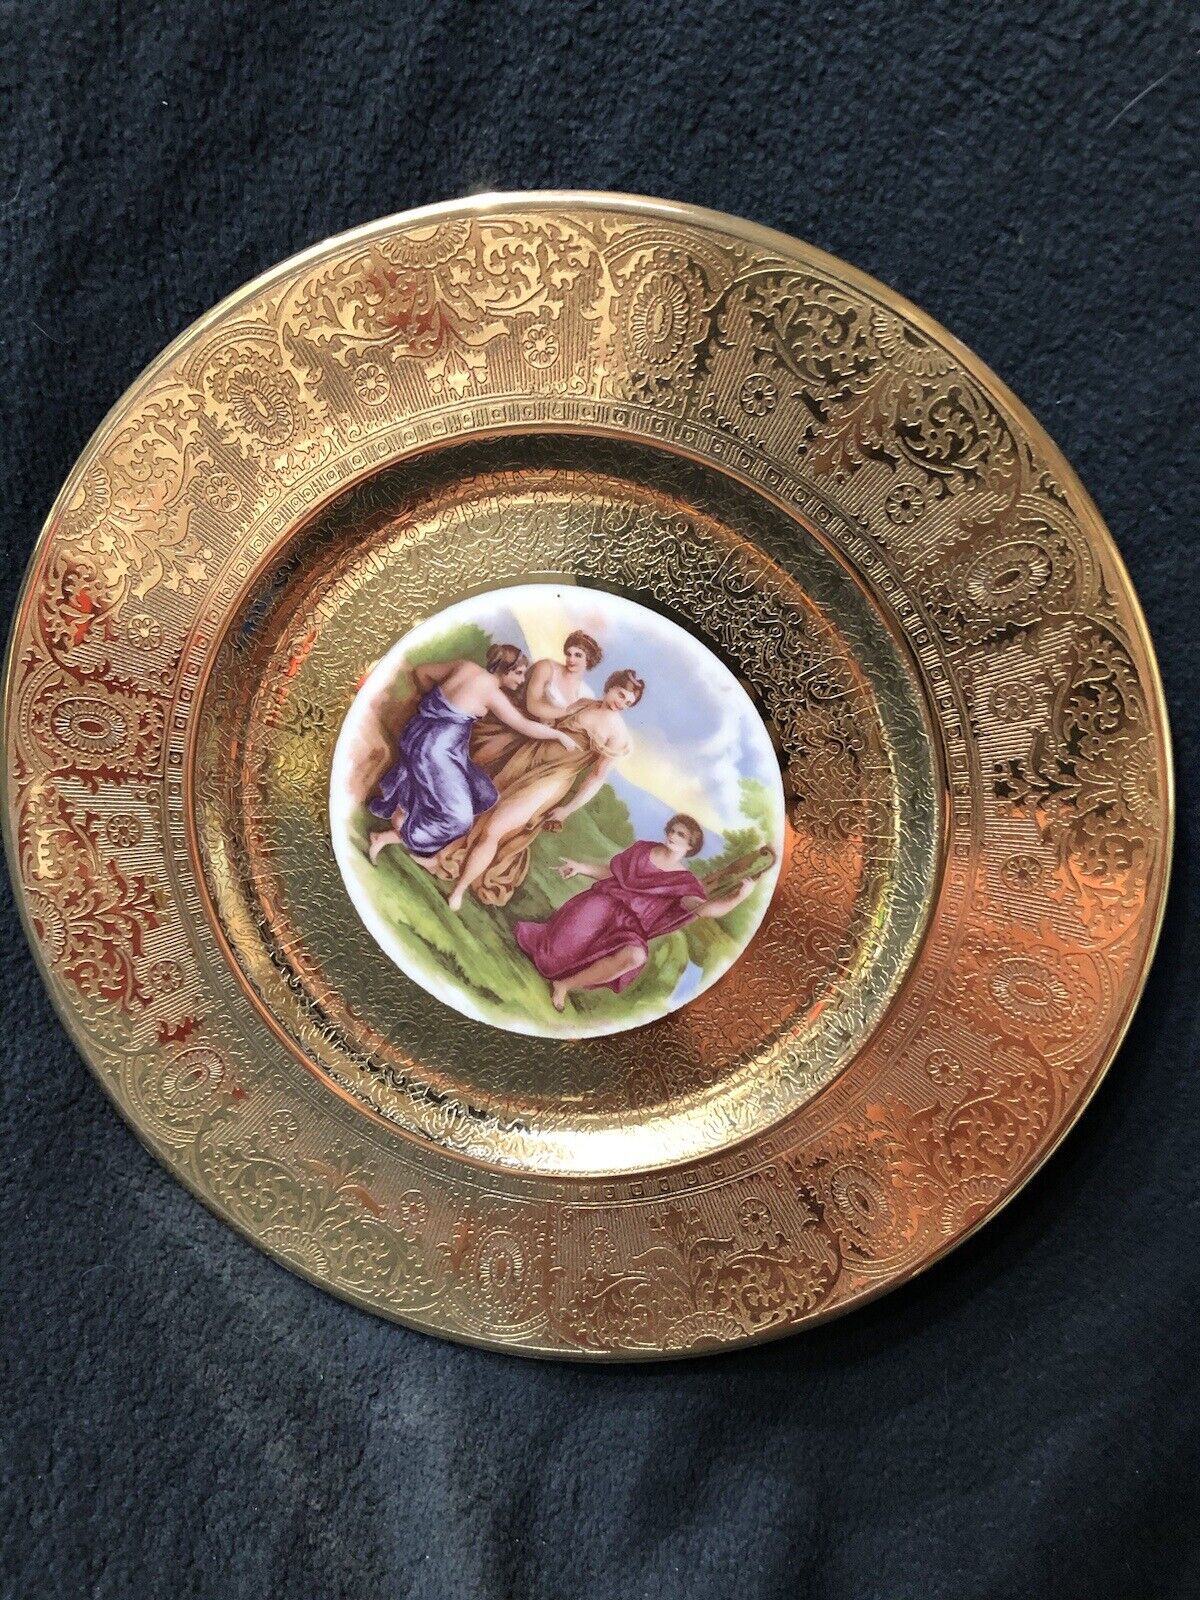 Antique Royal China Cabinet Plate ~ Warranted 22 Carat ~ Greek Mythology Scene